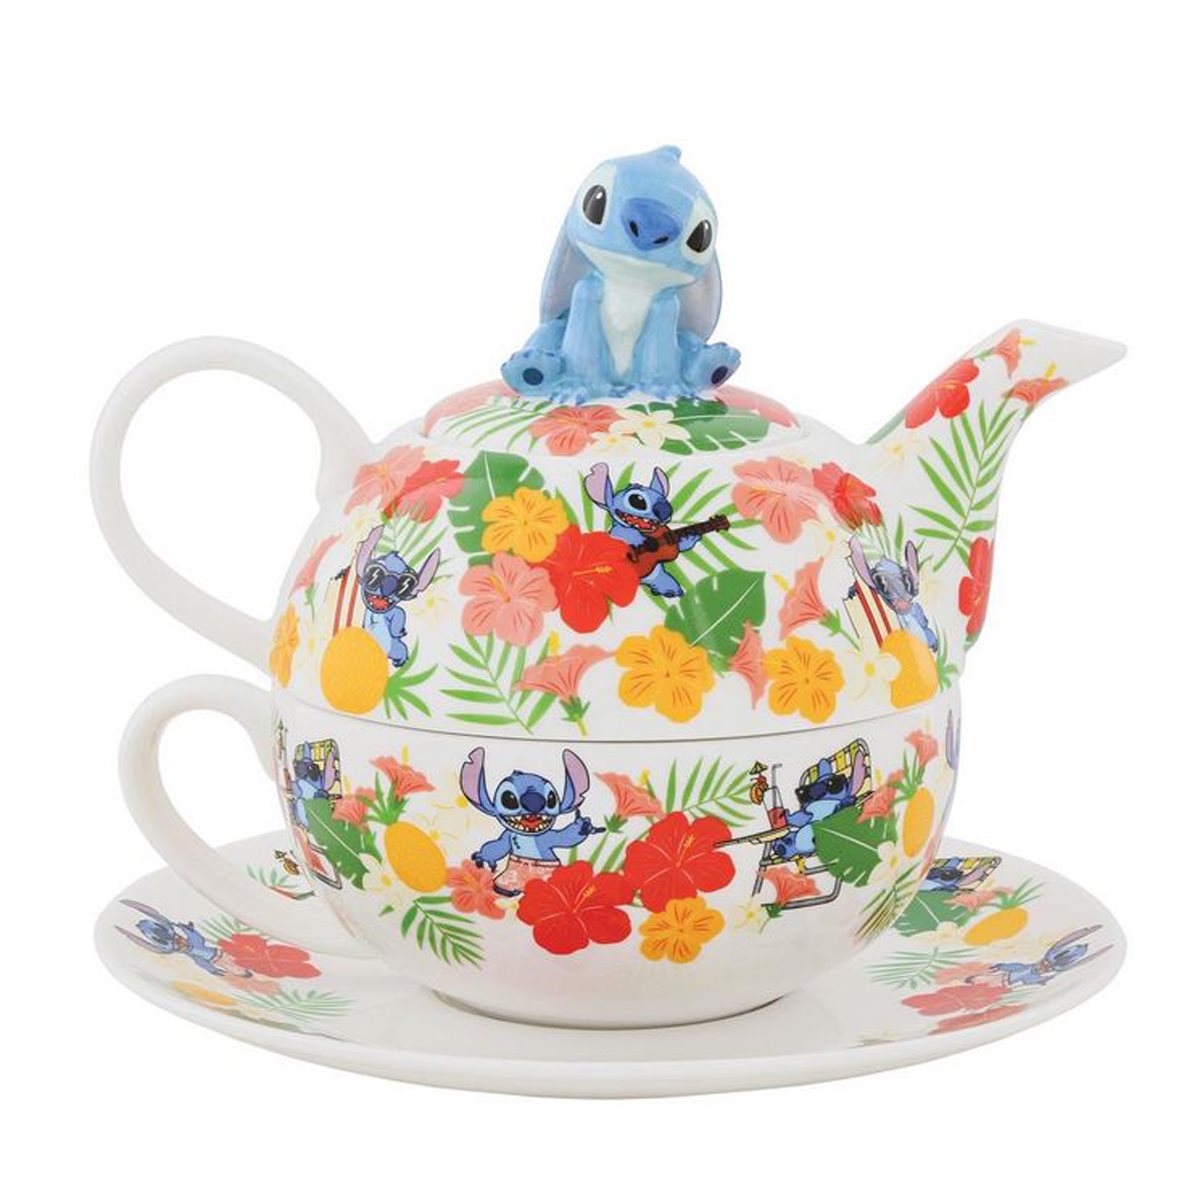 Disney Lilo Stitch Ceramic Teapot. Cooking and 19 similar items